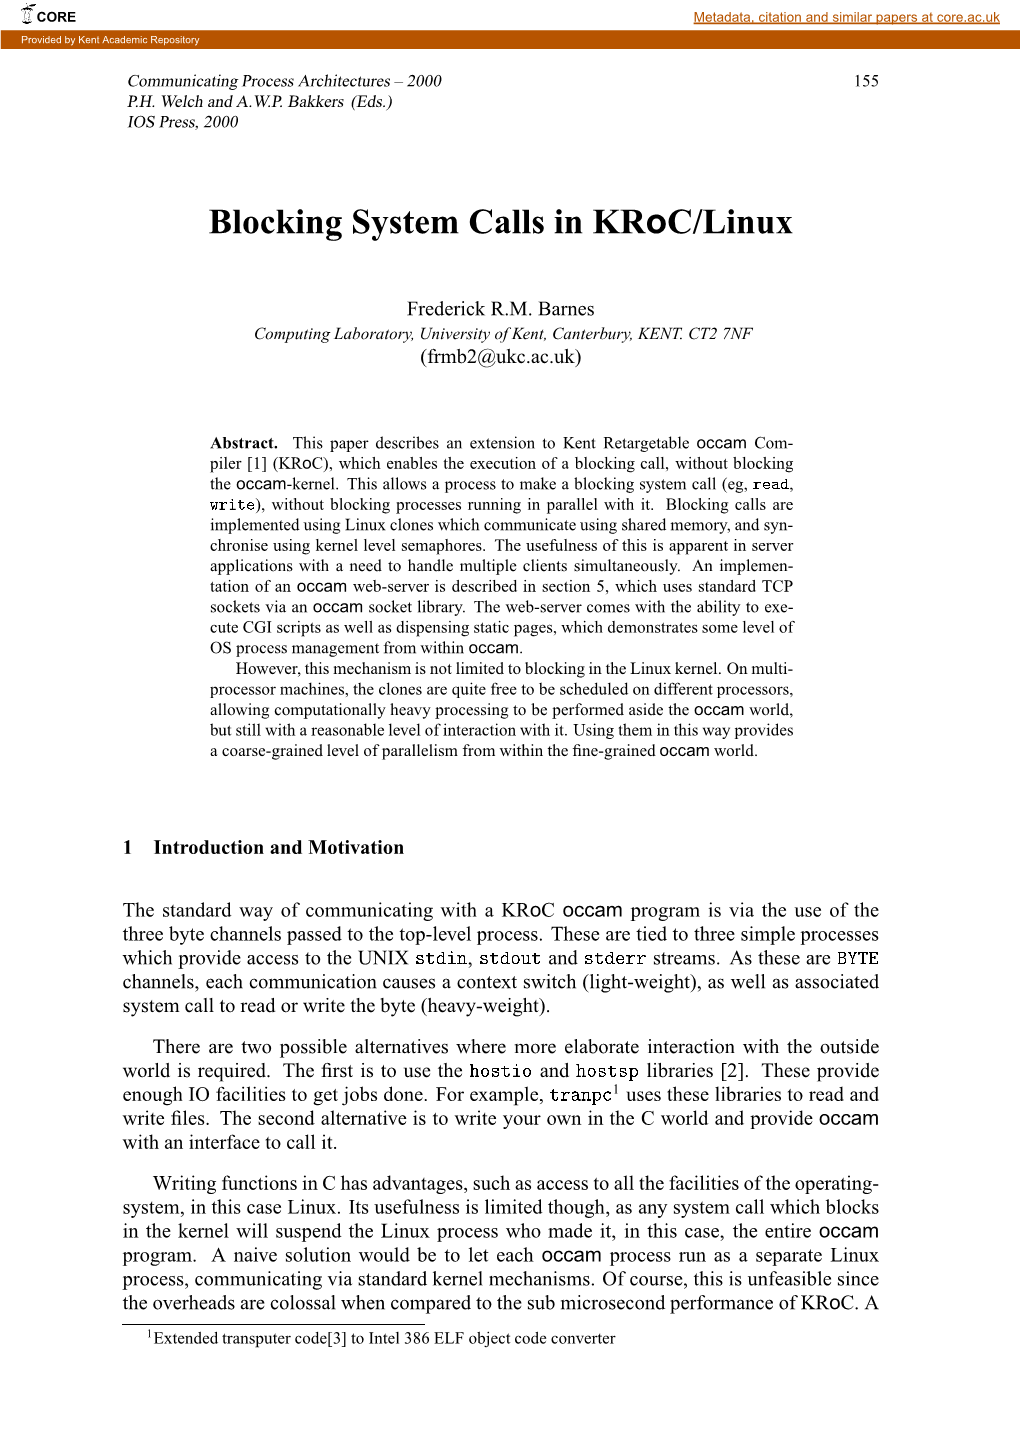 Blocking System Calls in Kroc/Linux